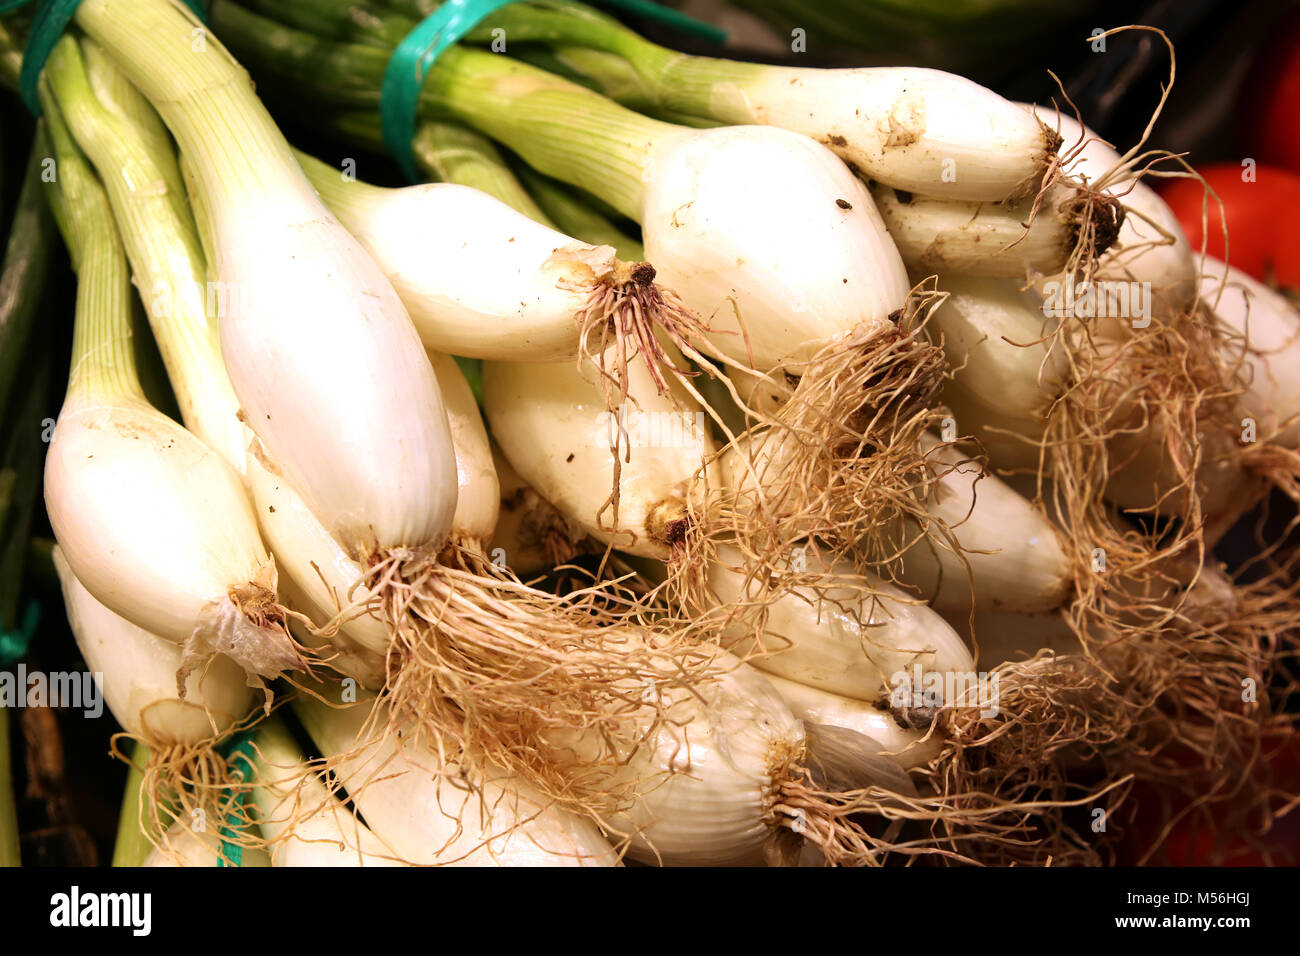 spring onions - Mercado de Tirana Market Hall Stock Photo